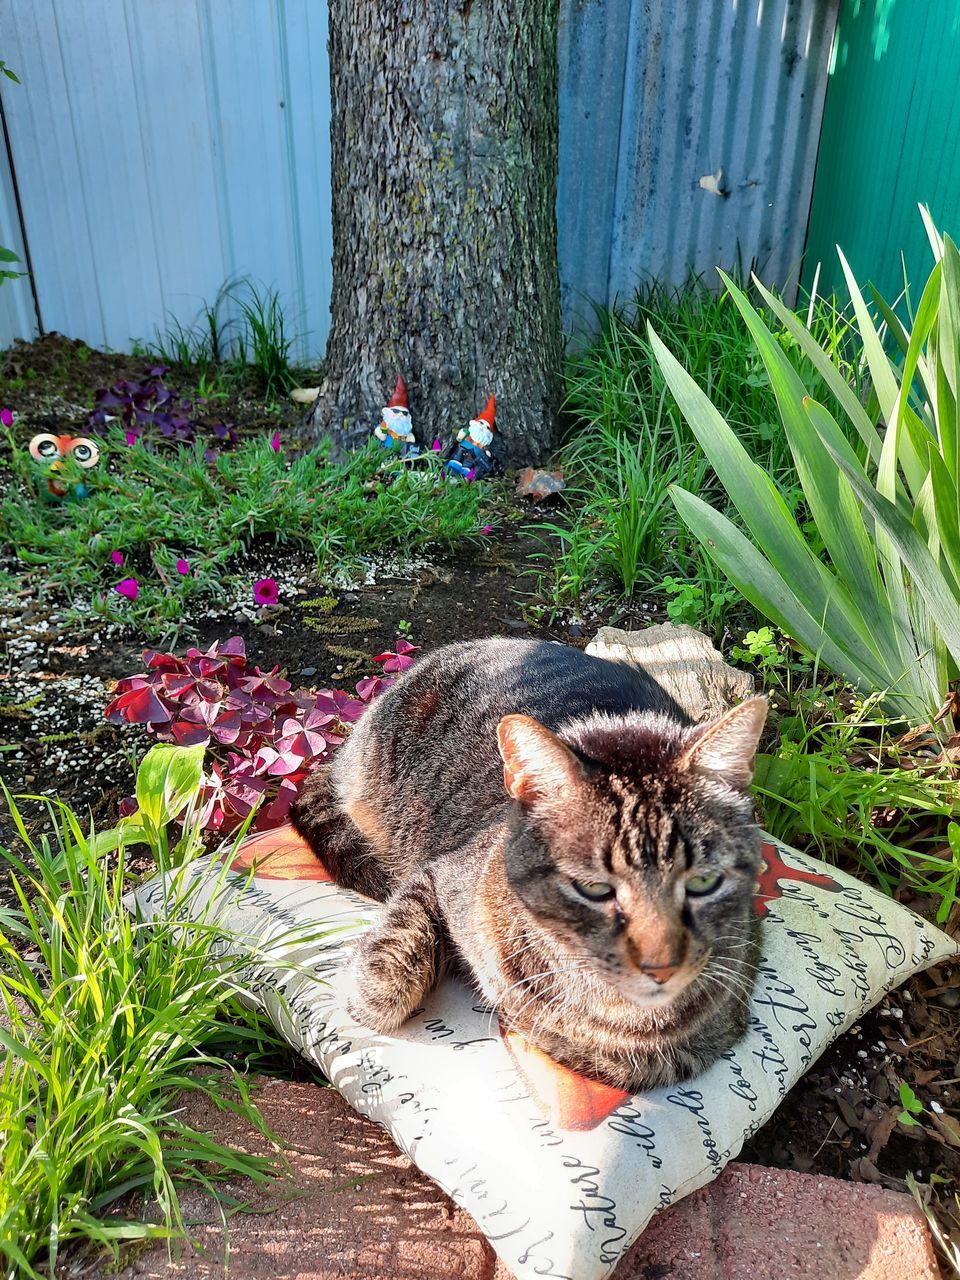 PORTRAIT OF CAT RELAXING ON GRASSY FIELD